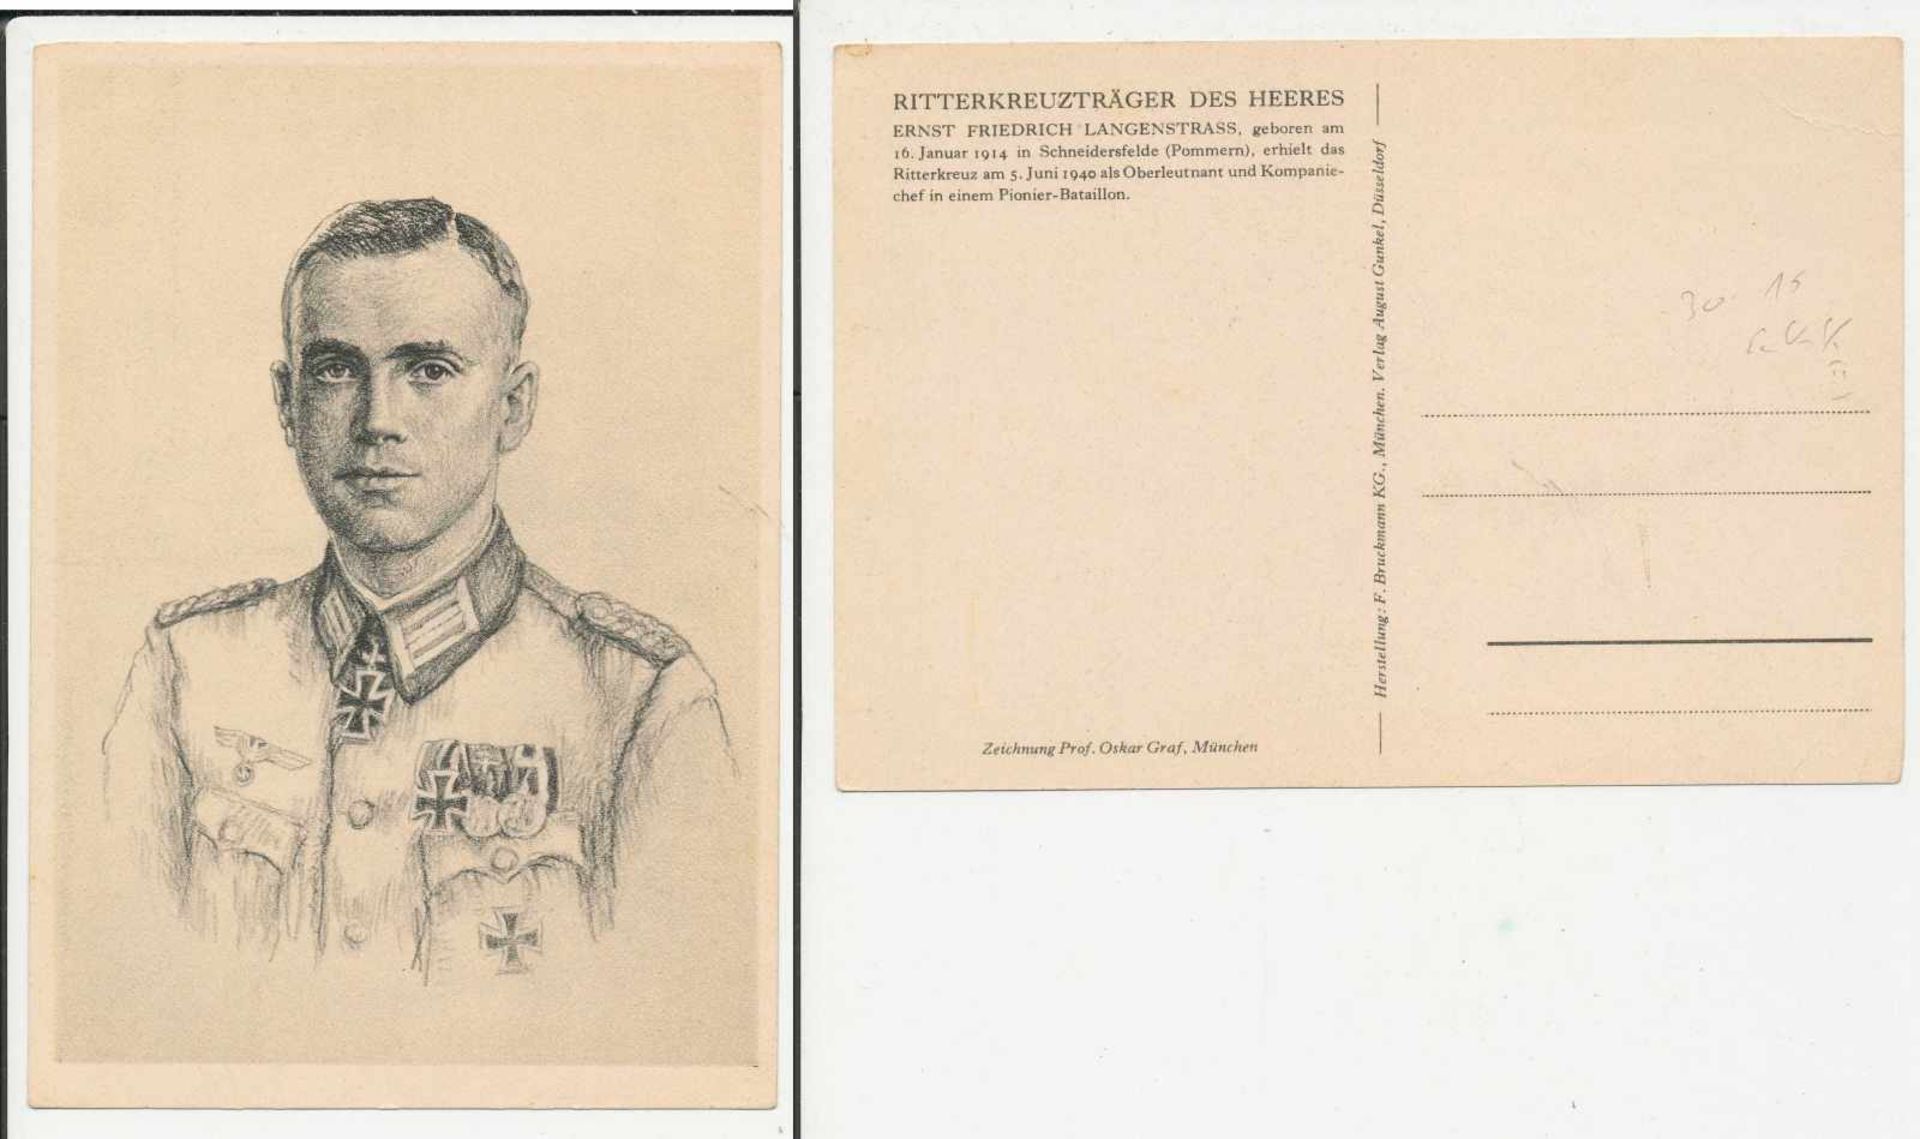 1 Postkarte, großes Format, br/w, Ritterkreuzträger des Heers - Ernst Friedrich Langestrass,